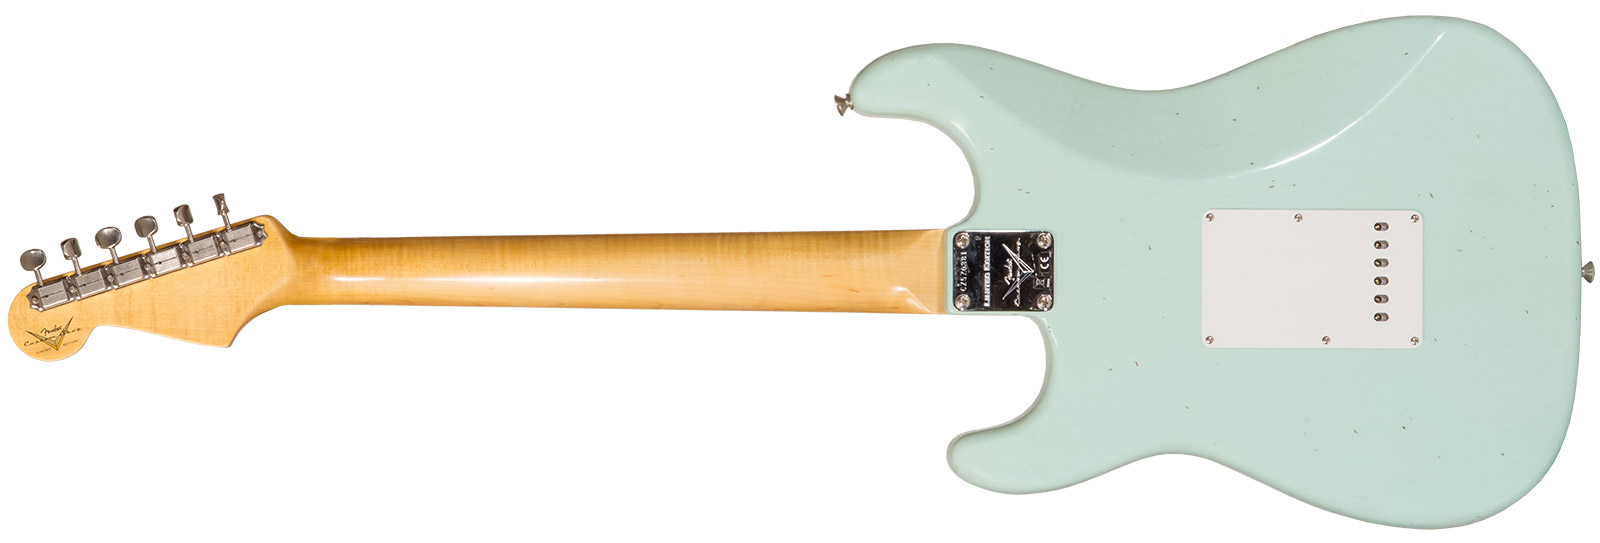 Fender Custom Shop Strat 1964 3s Trem Rw #cz570381 - Journeyman Relic Aged Surf Green - E-Gitarre in Str-Form - Variation 1